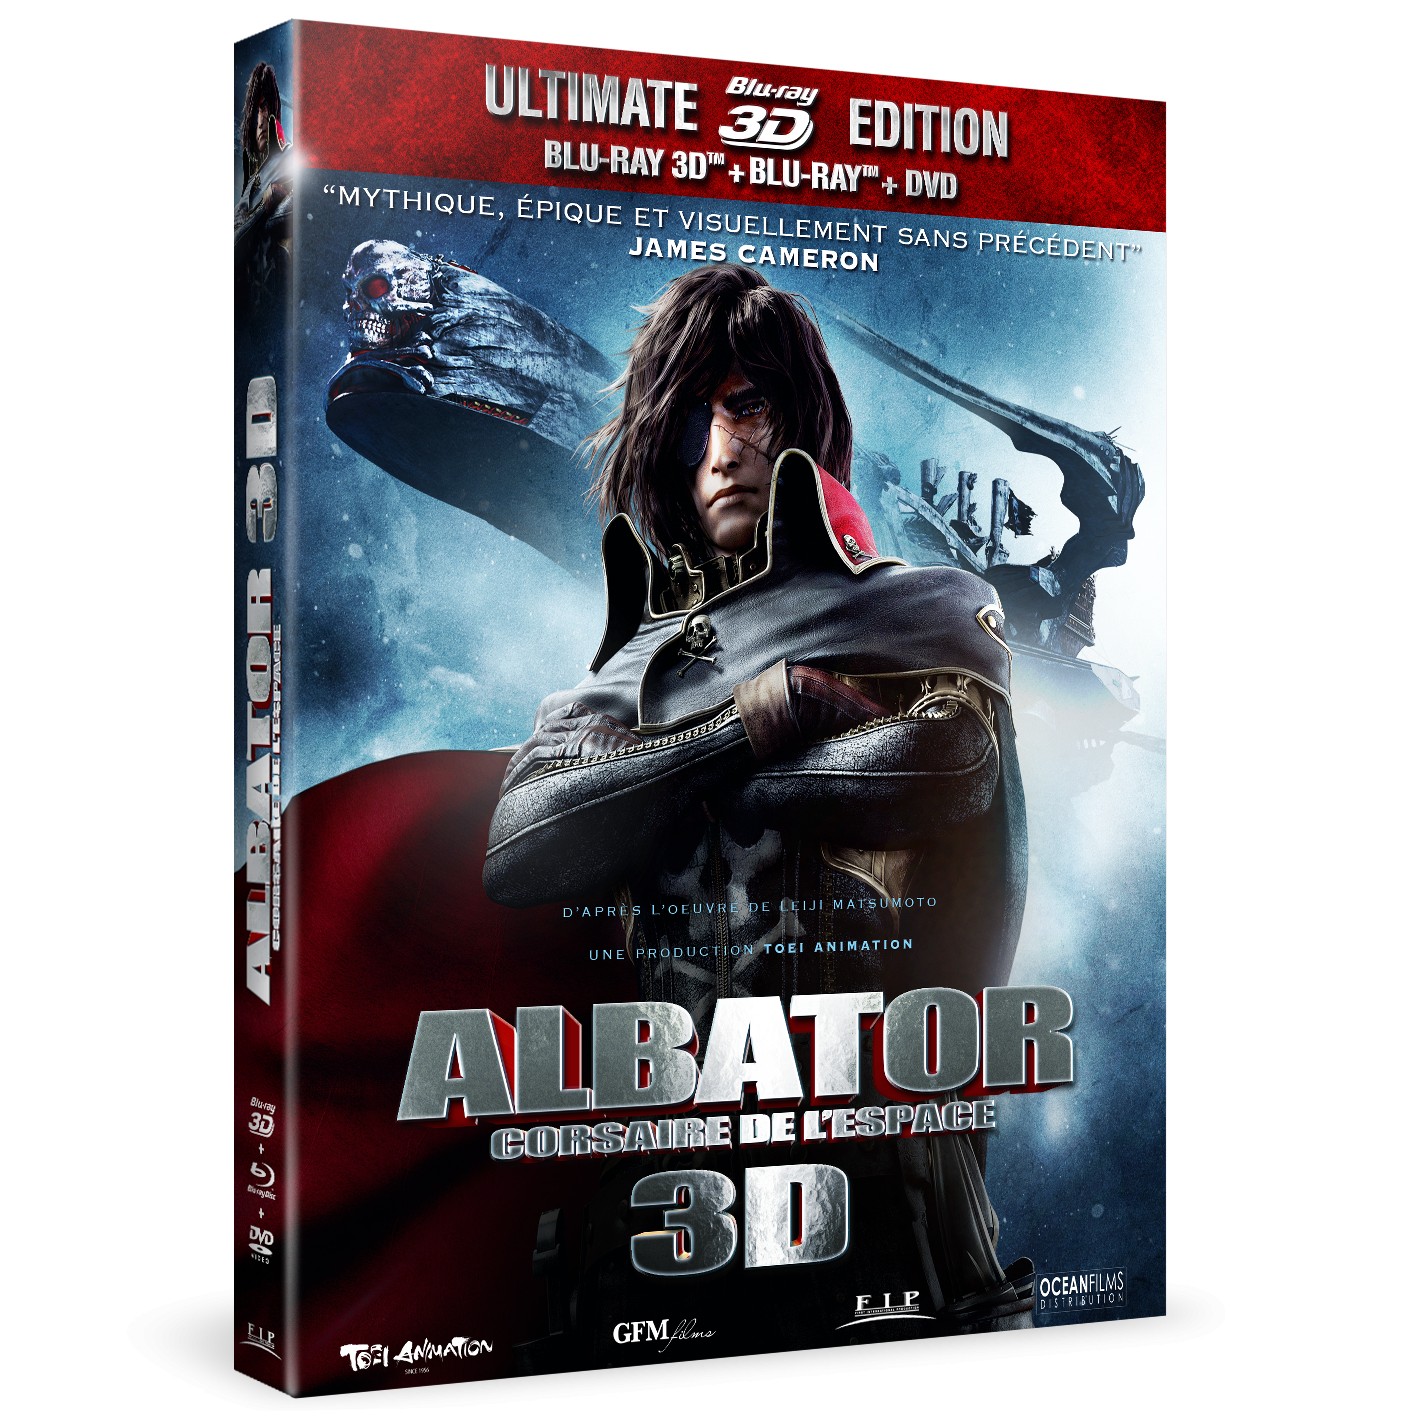 Blu ray магическая битва 2. Blu-ray издания. Блю Рей эдишн. Blu ray 3d. Выживший (Blu-ray).